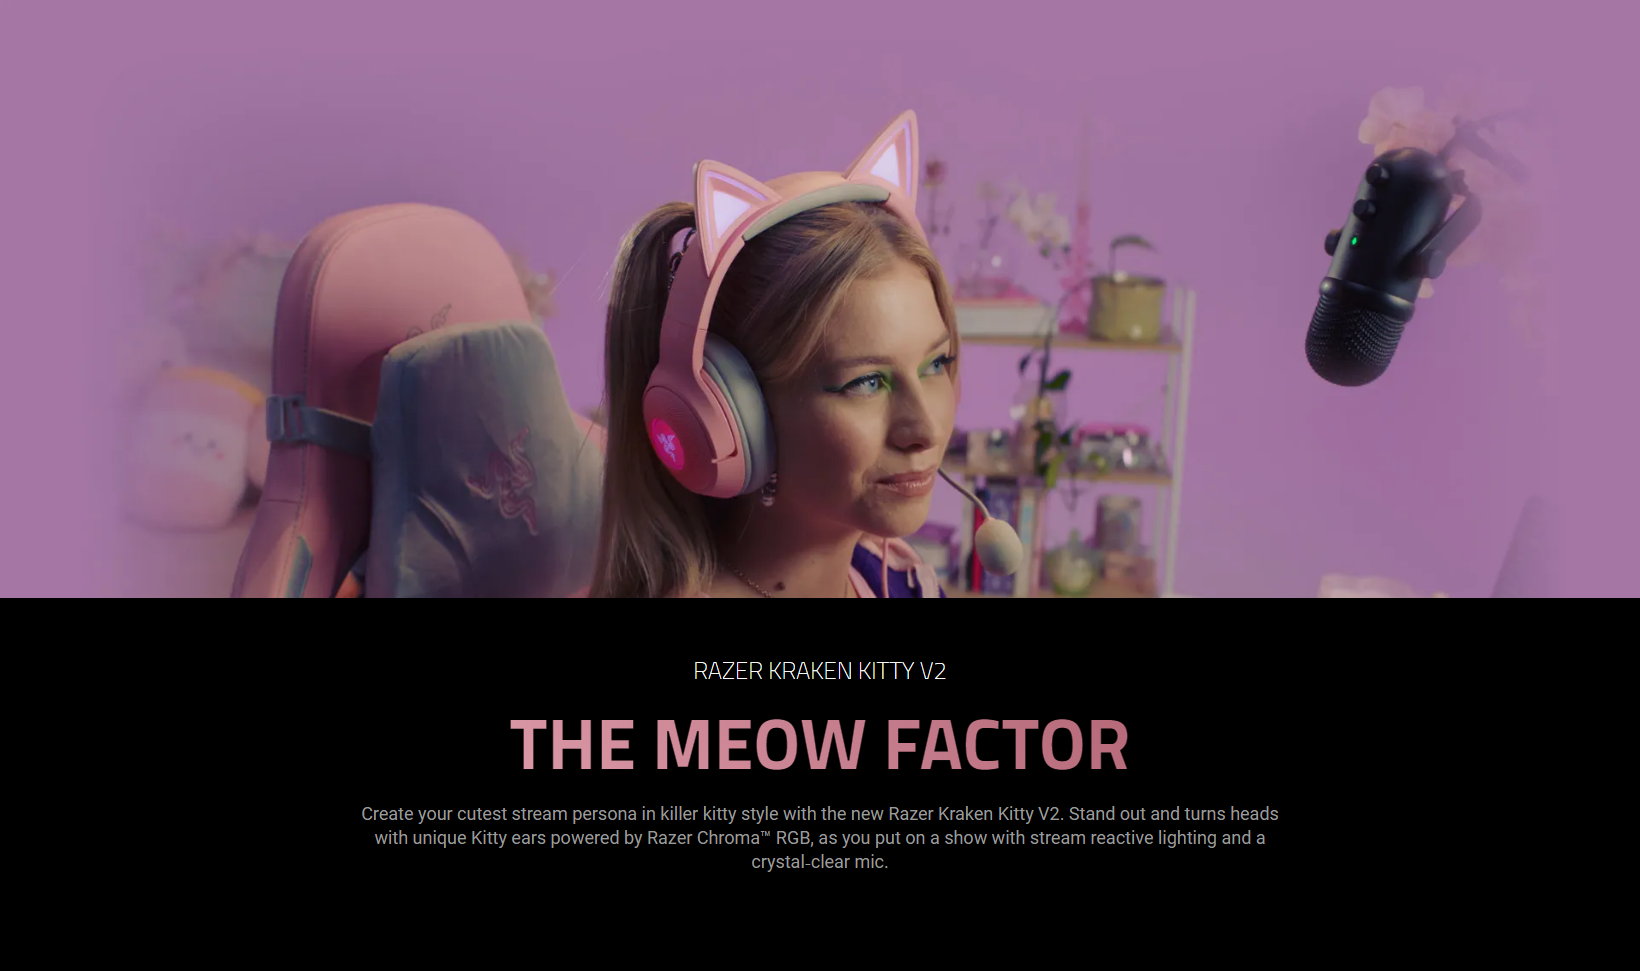 A large marketing image providing additional information about the product Razer Kraken Kitty V2 - USB Gaming Headset (Quartz Pink) - Additional alt info not provided